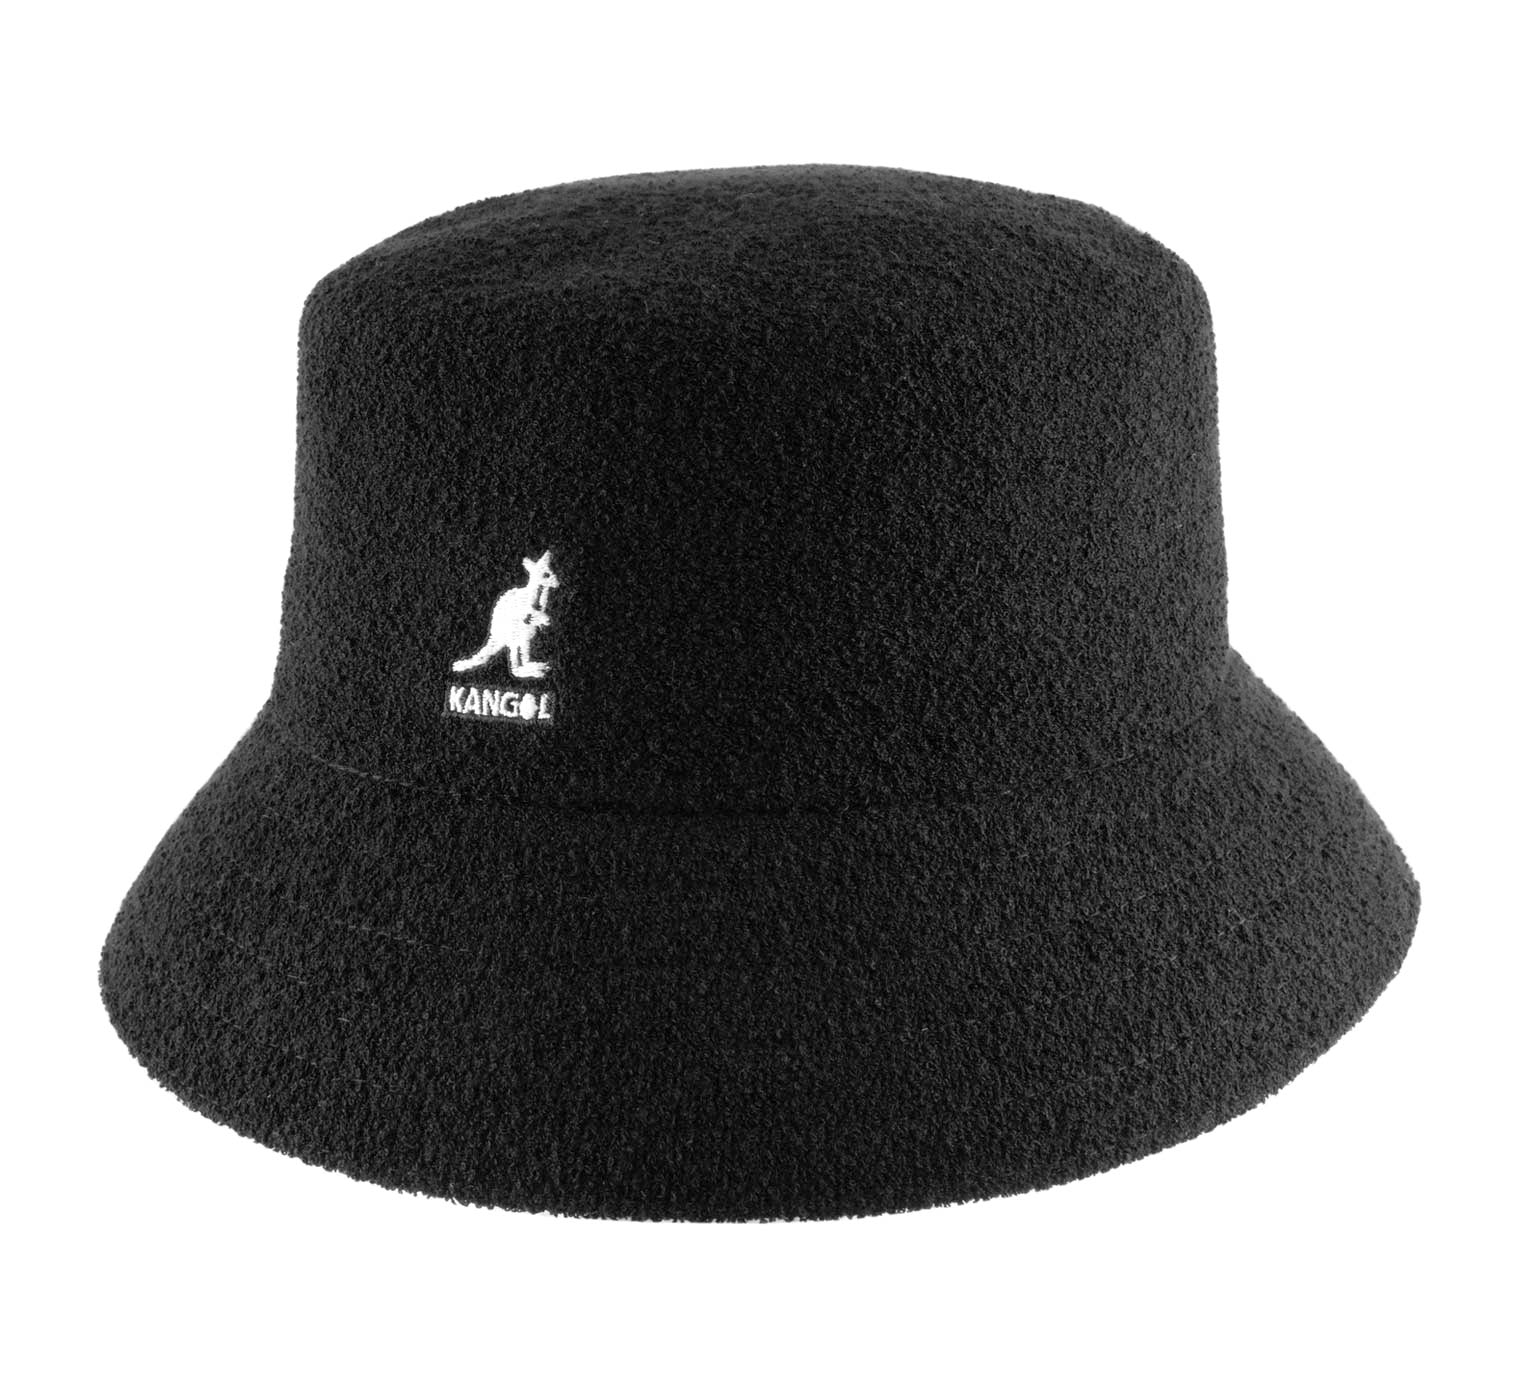 WIND AND SEA KANGOL BERMUDA BUCKET Black - 帽子